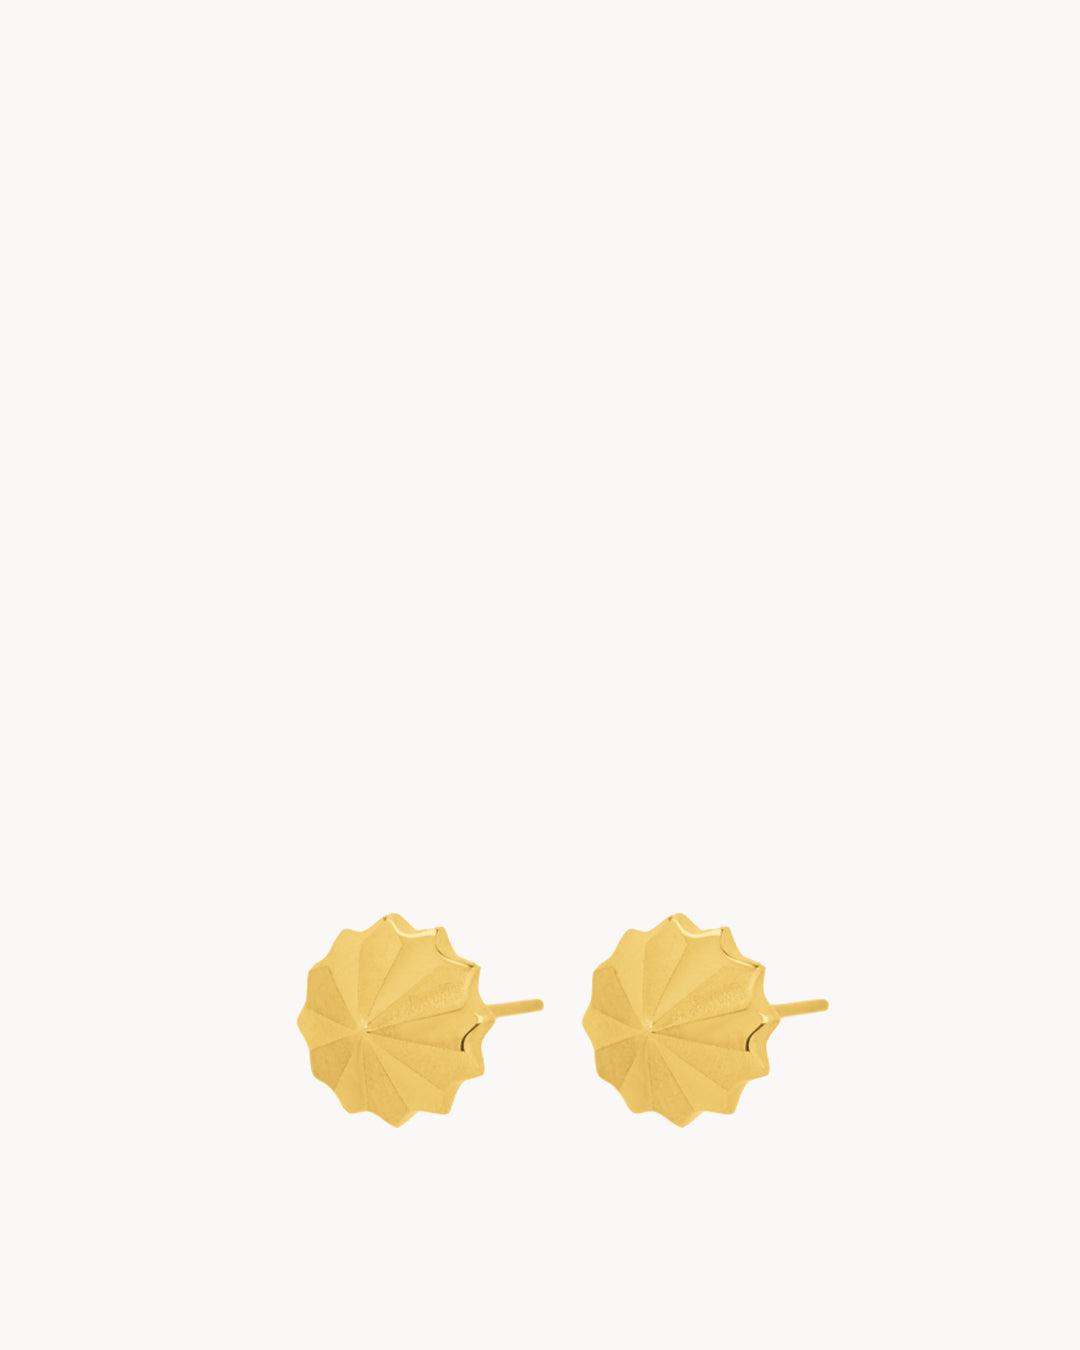 Carnation Stud Earrings, Gold